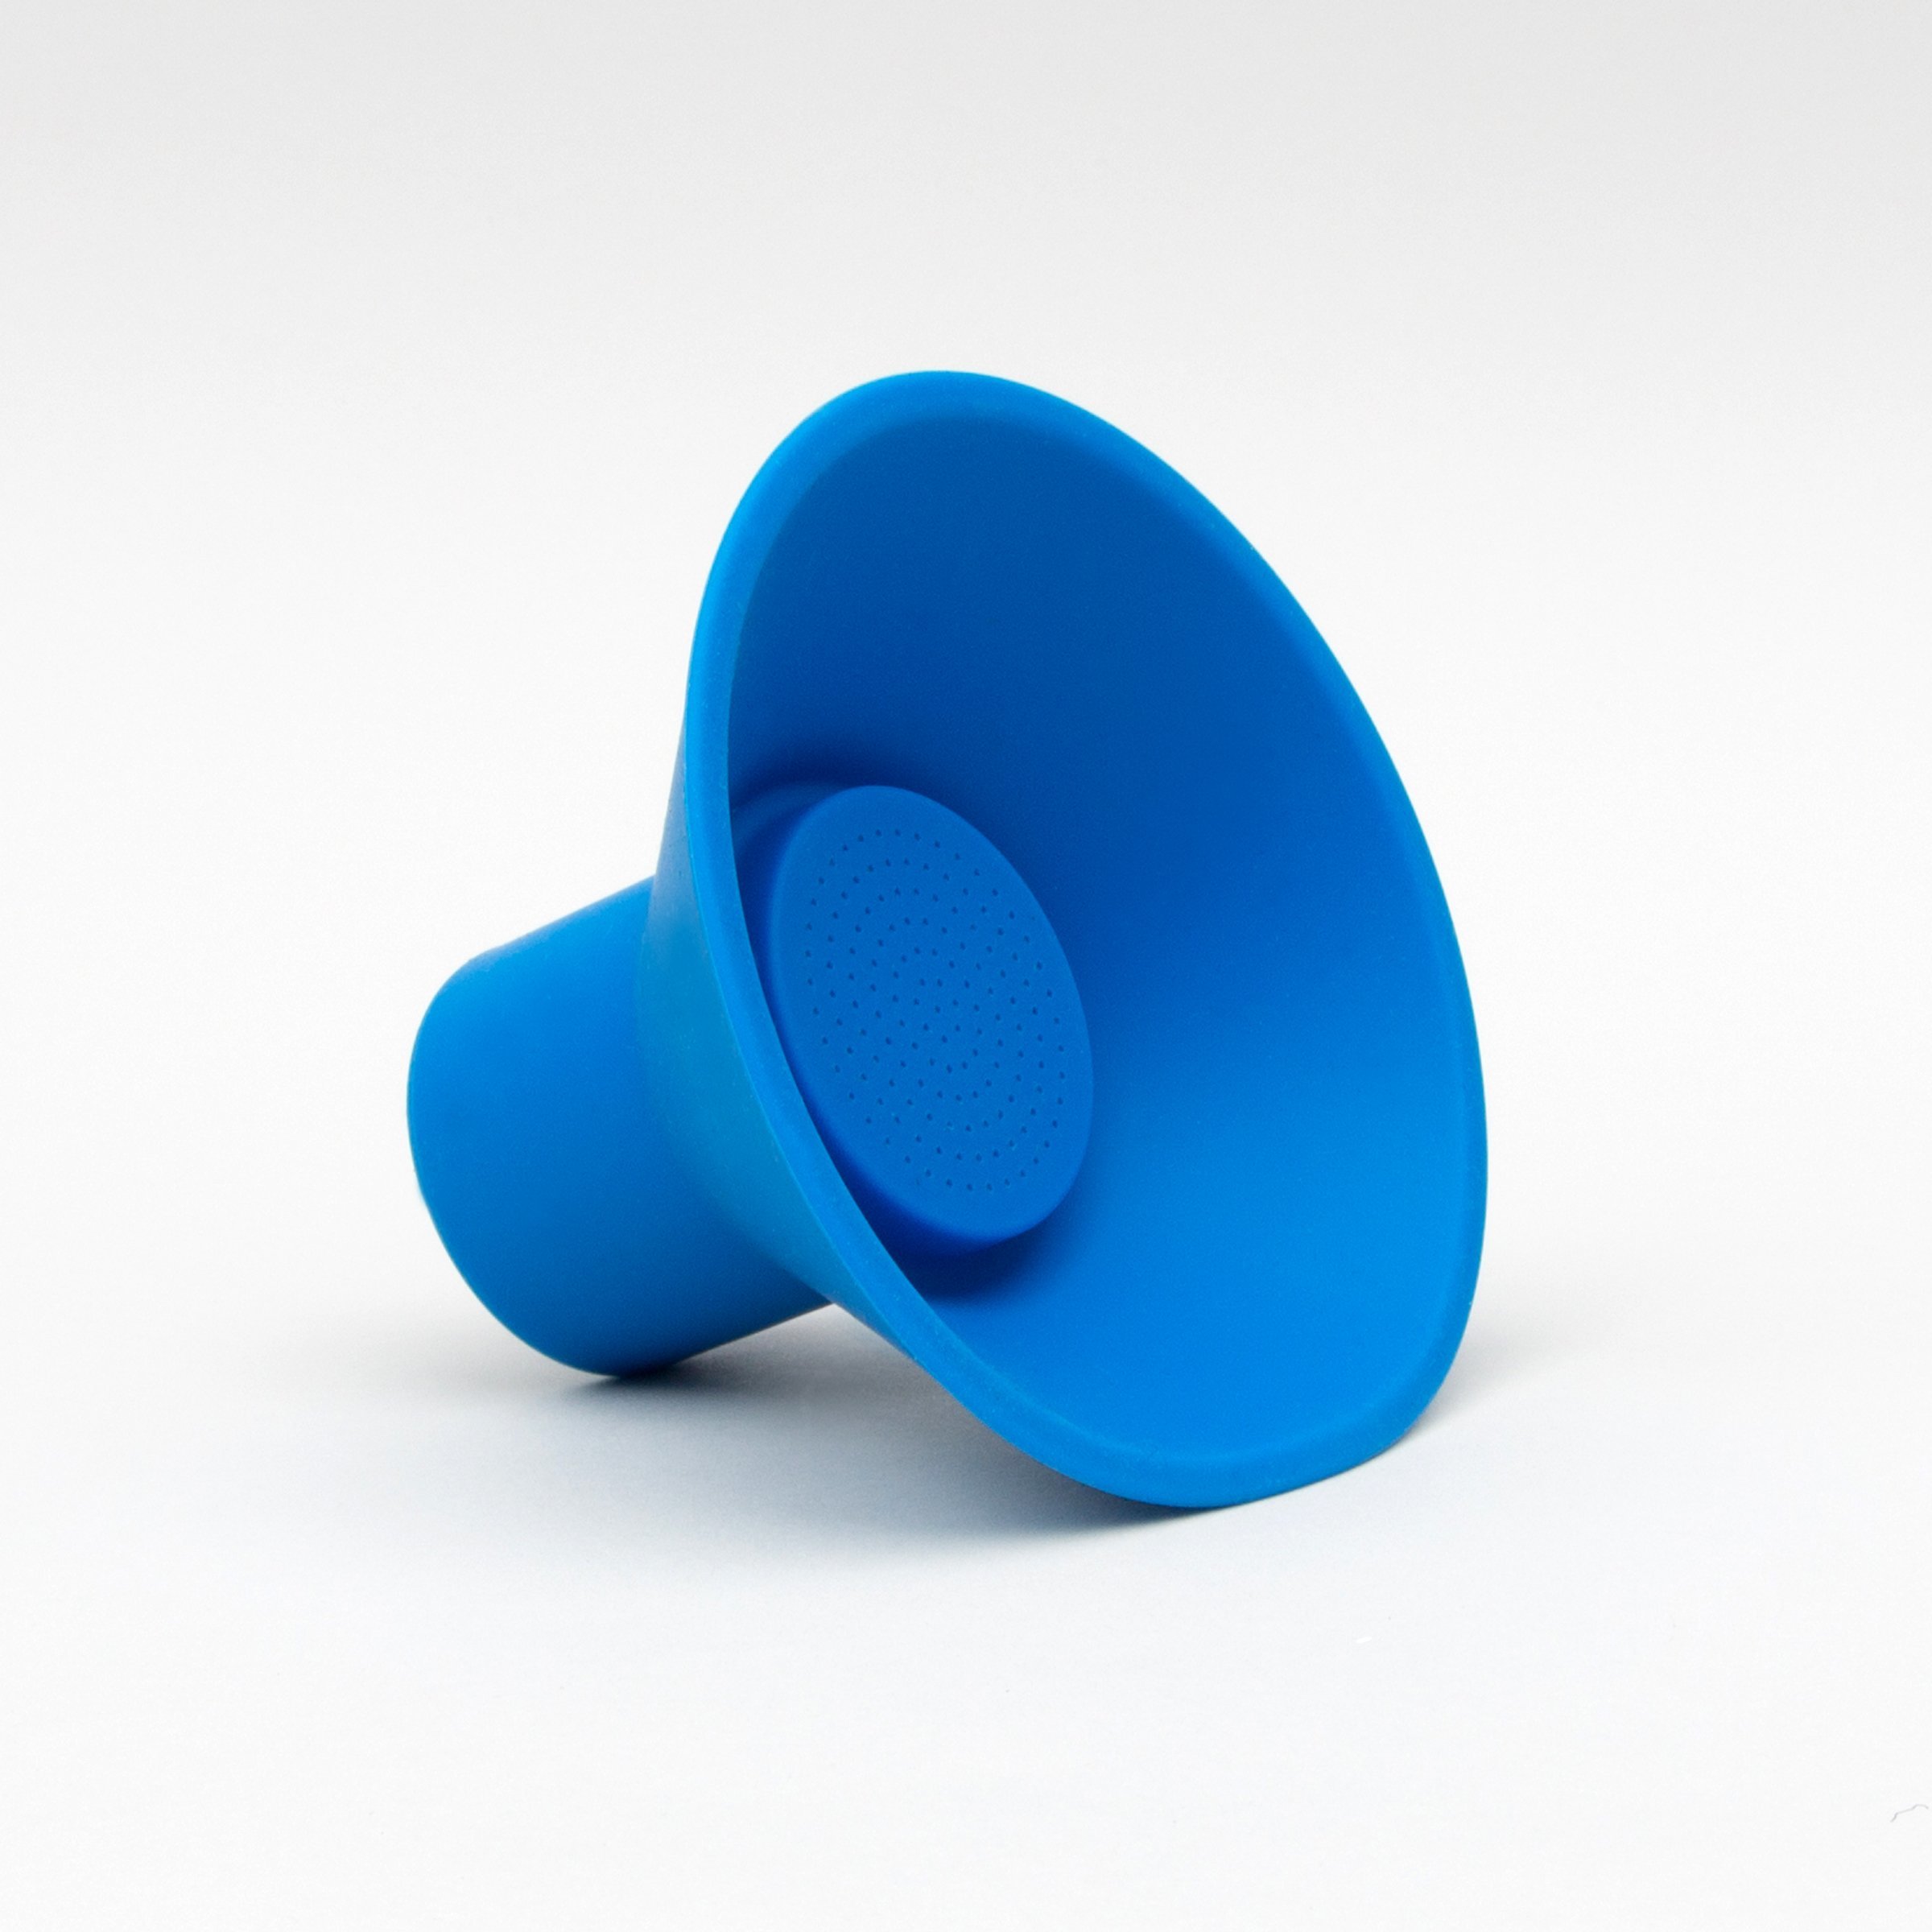 Wireless silicone speaker in blue